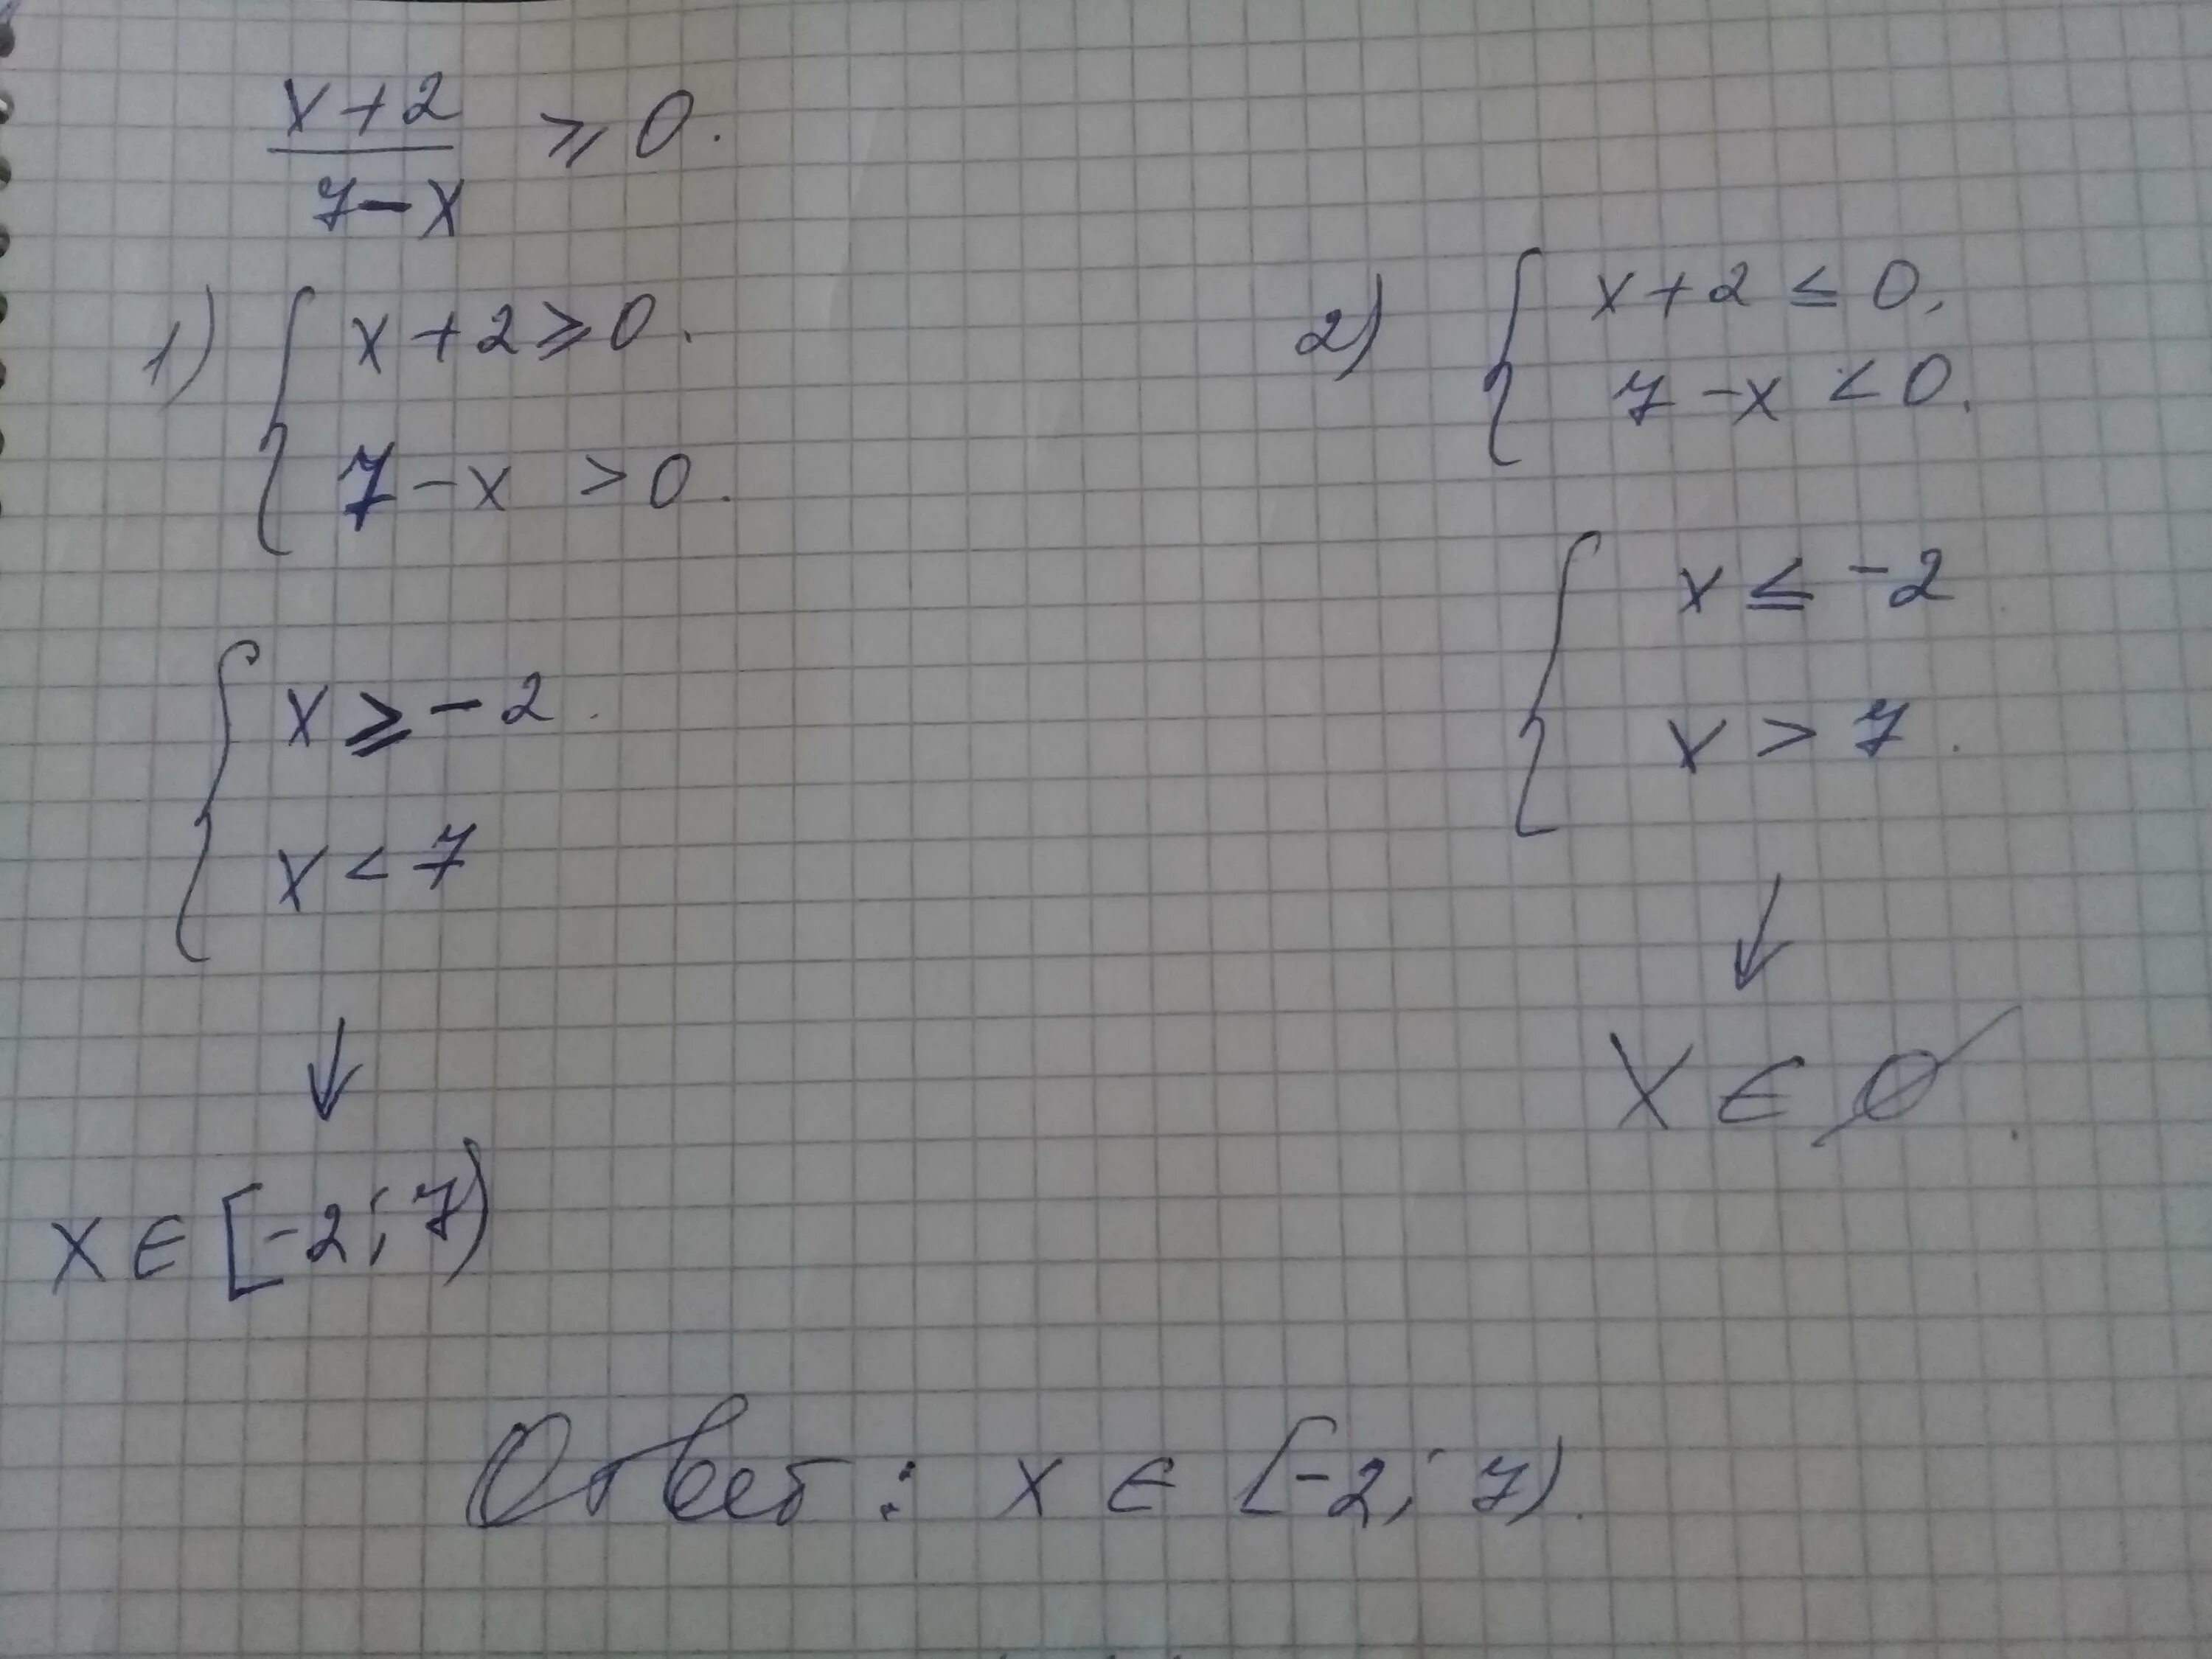 X2 2x x 2 15 x 2. X 2 7x 10 больше или равно нулю. 7x-x2 больше или равно 0. X больше или равно 0. 7x-x2 больше 0.